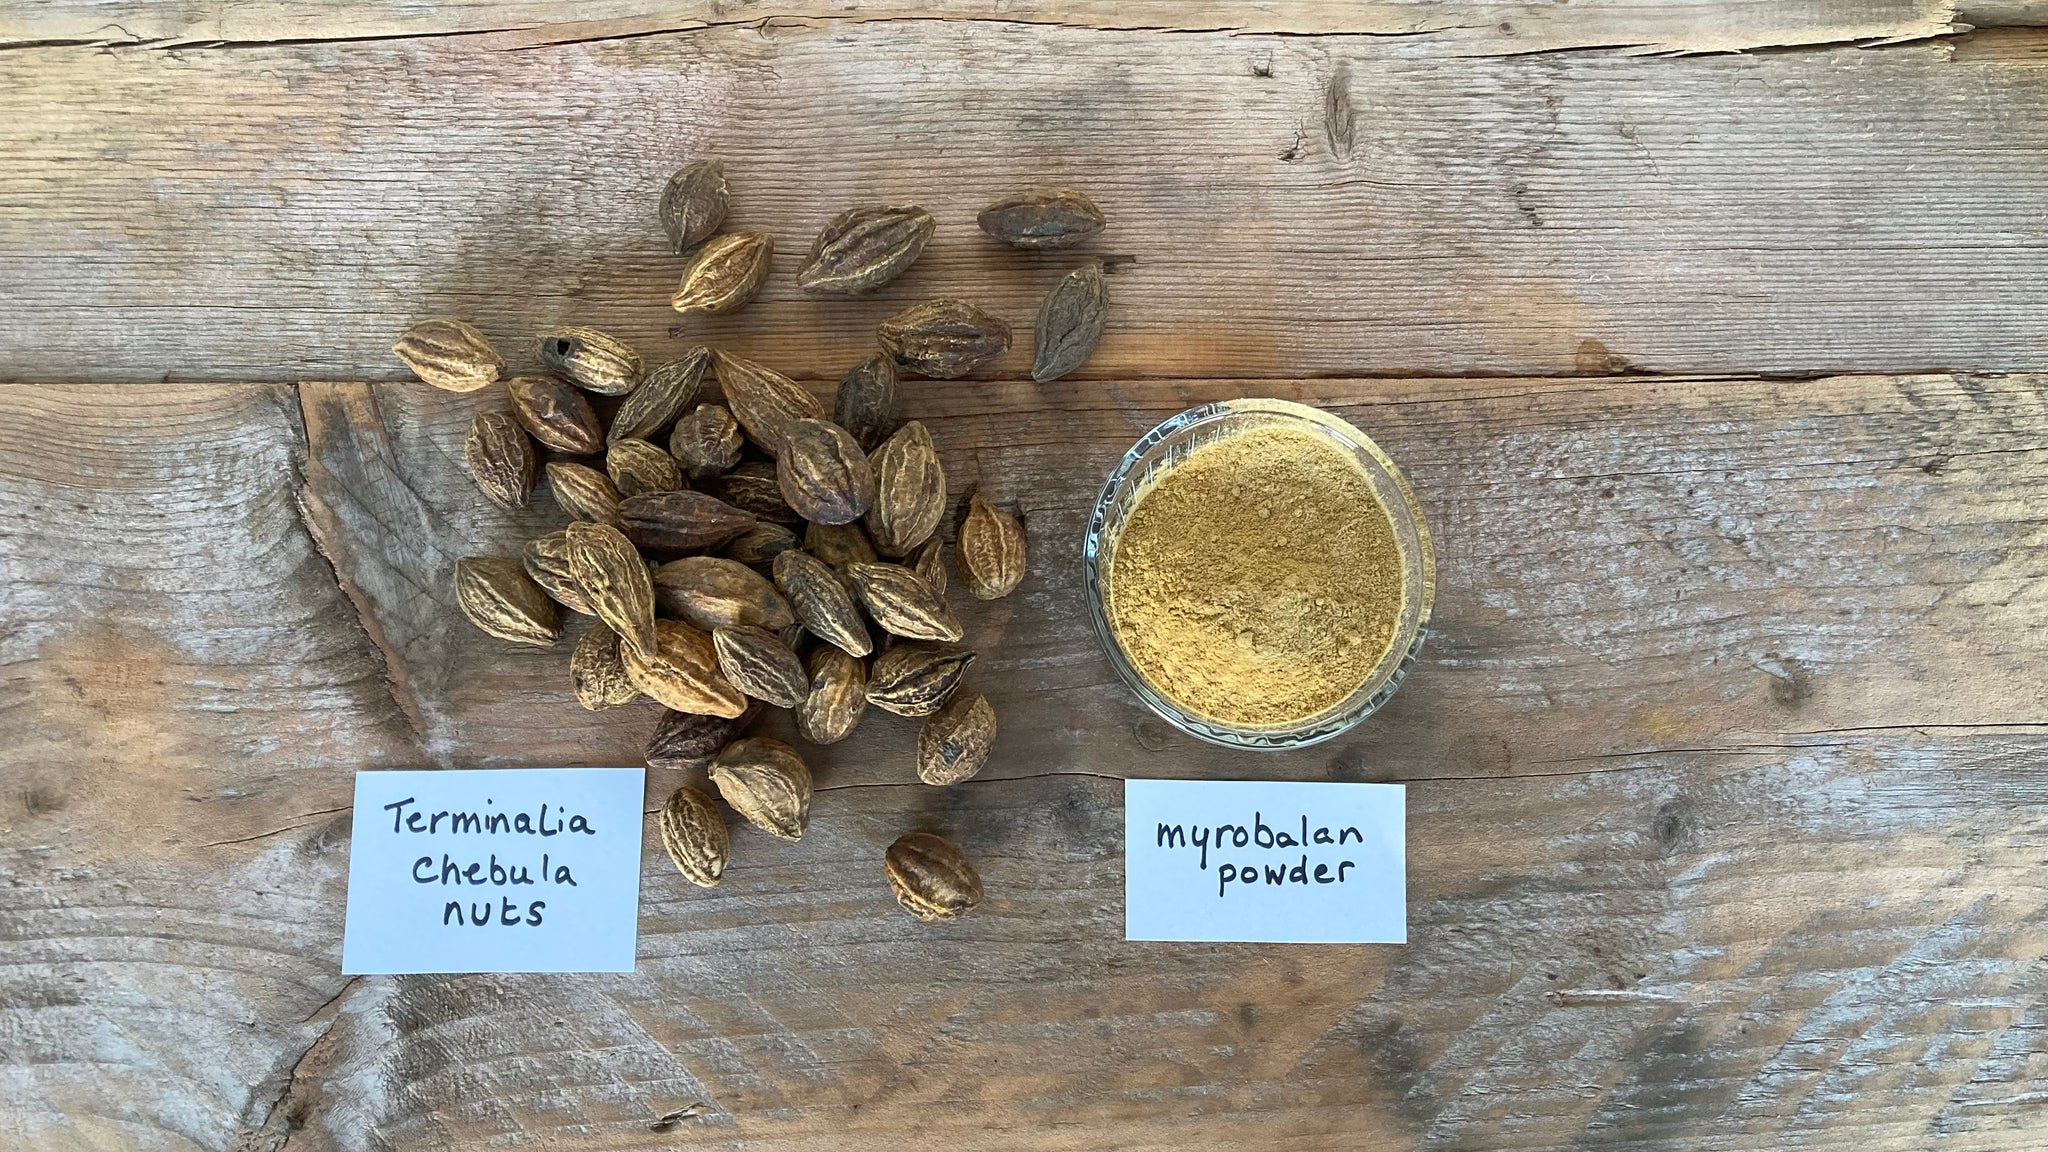 Terminalia chebula nuts and myrobalan powder